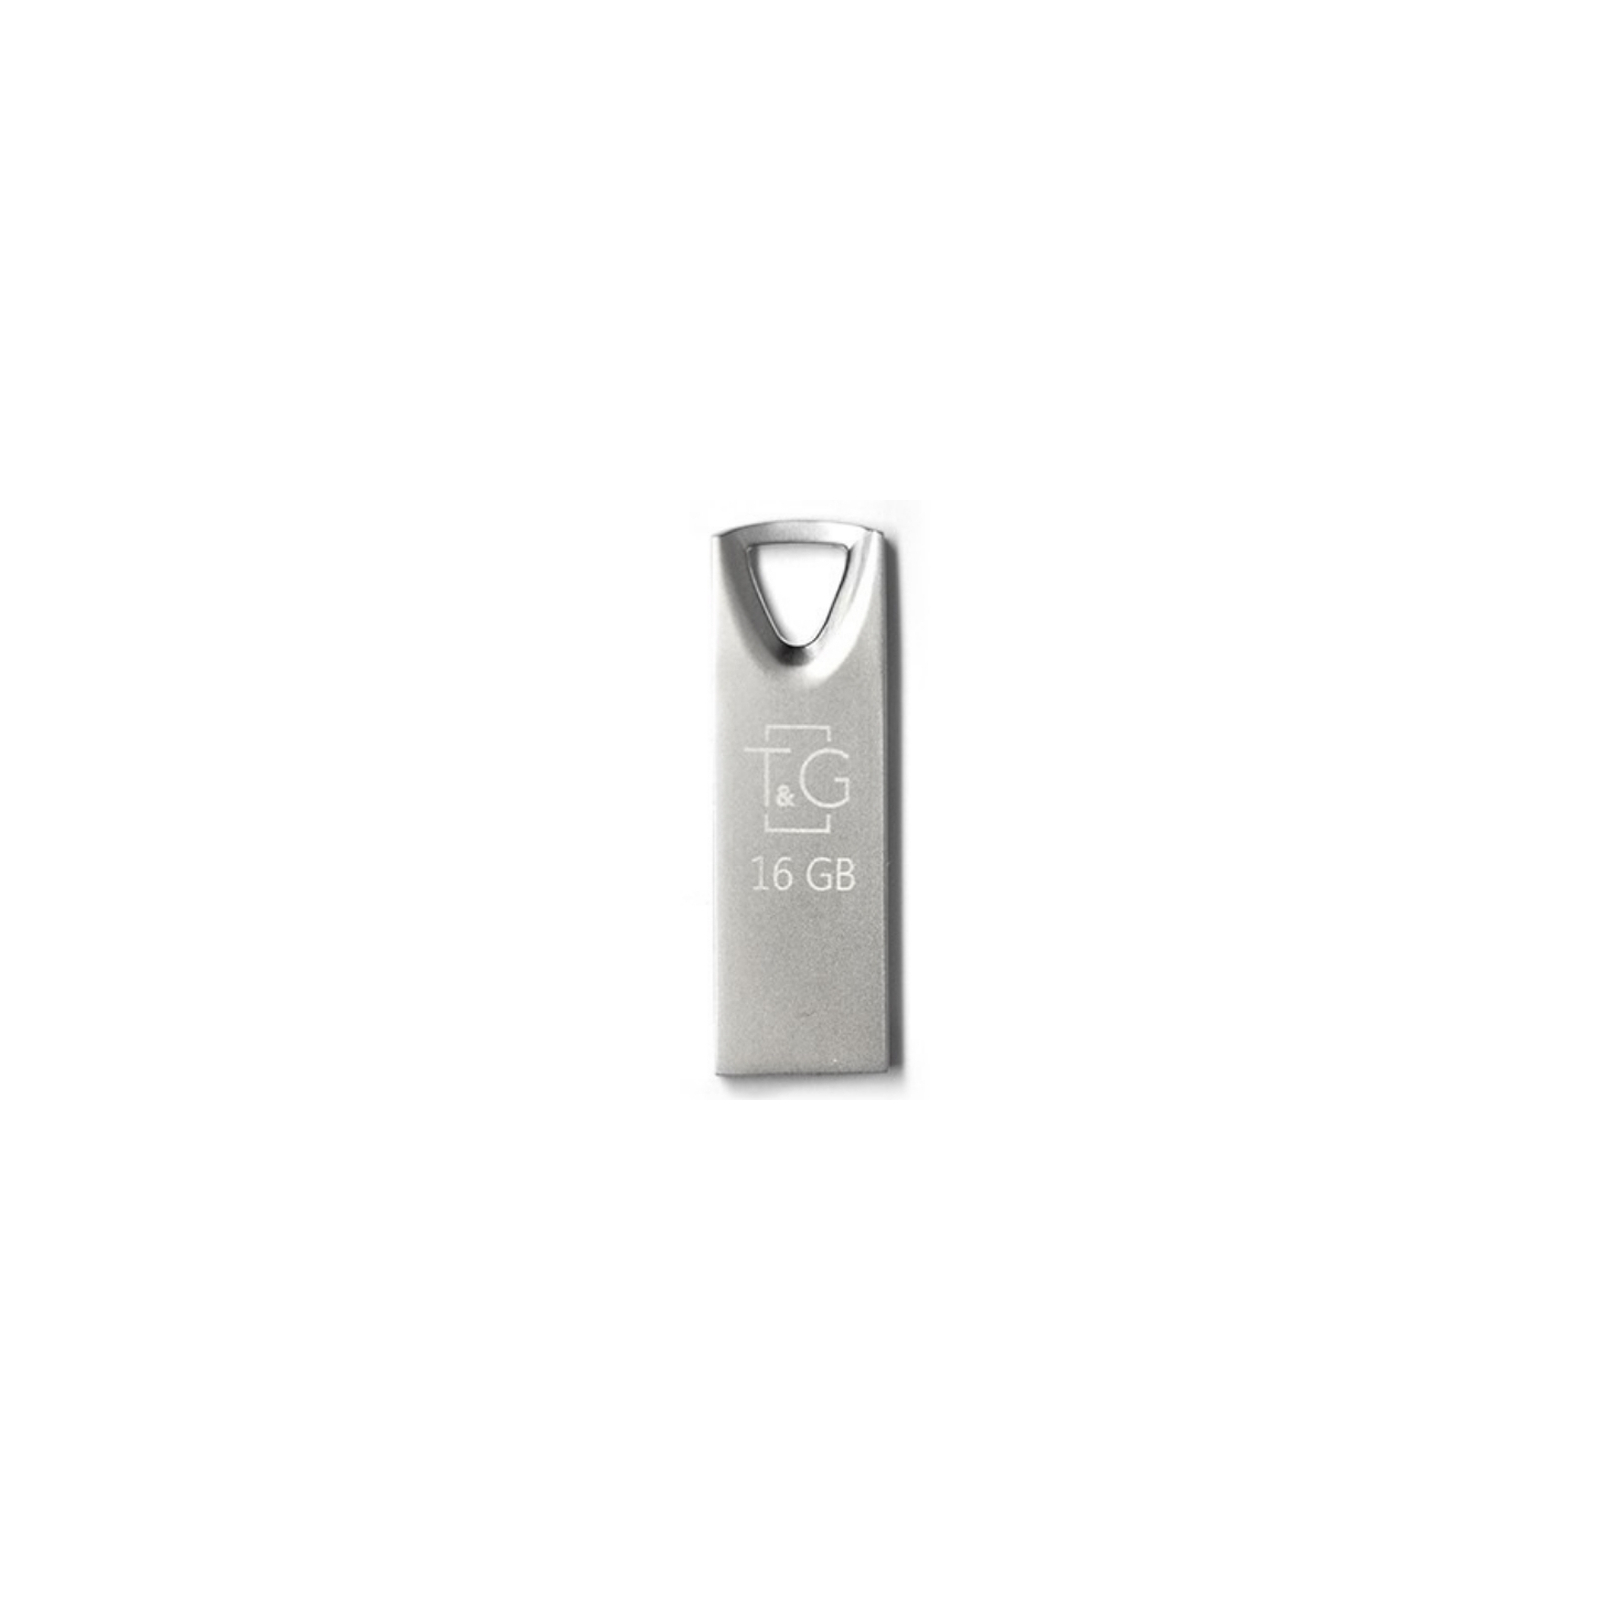 USB флеш накопитель T&G 16GB 117 Metal Series Black USB 2.0 (TG117BK-16G)